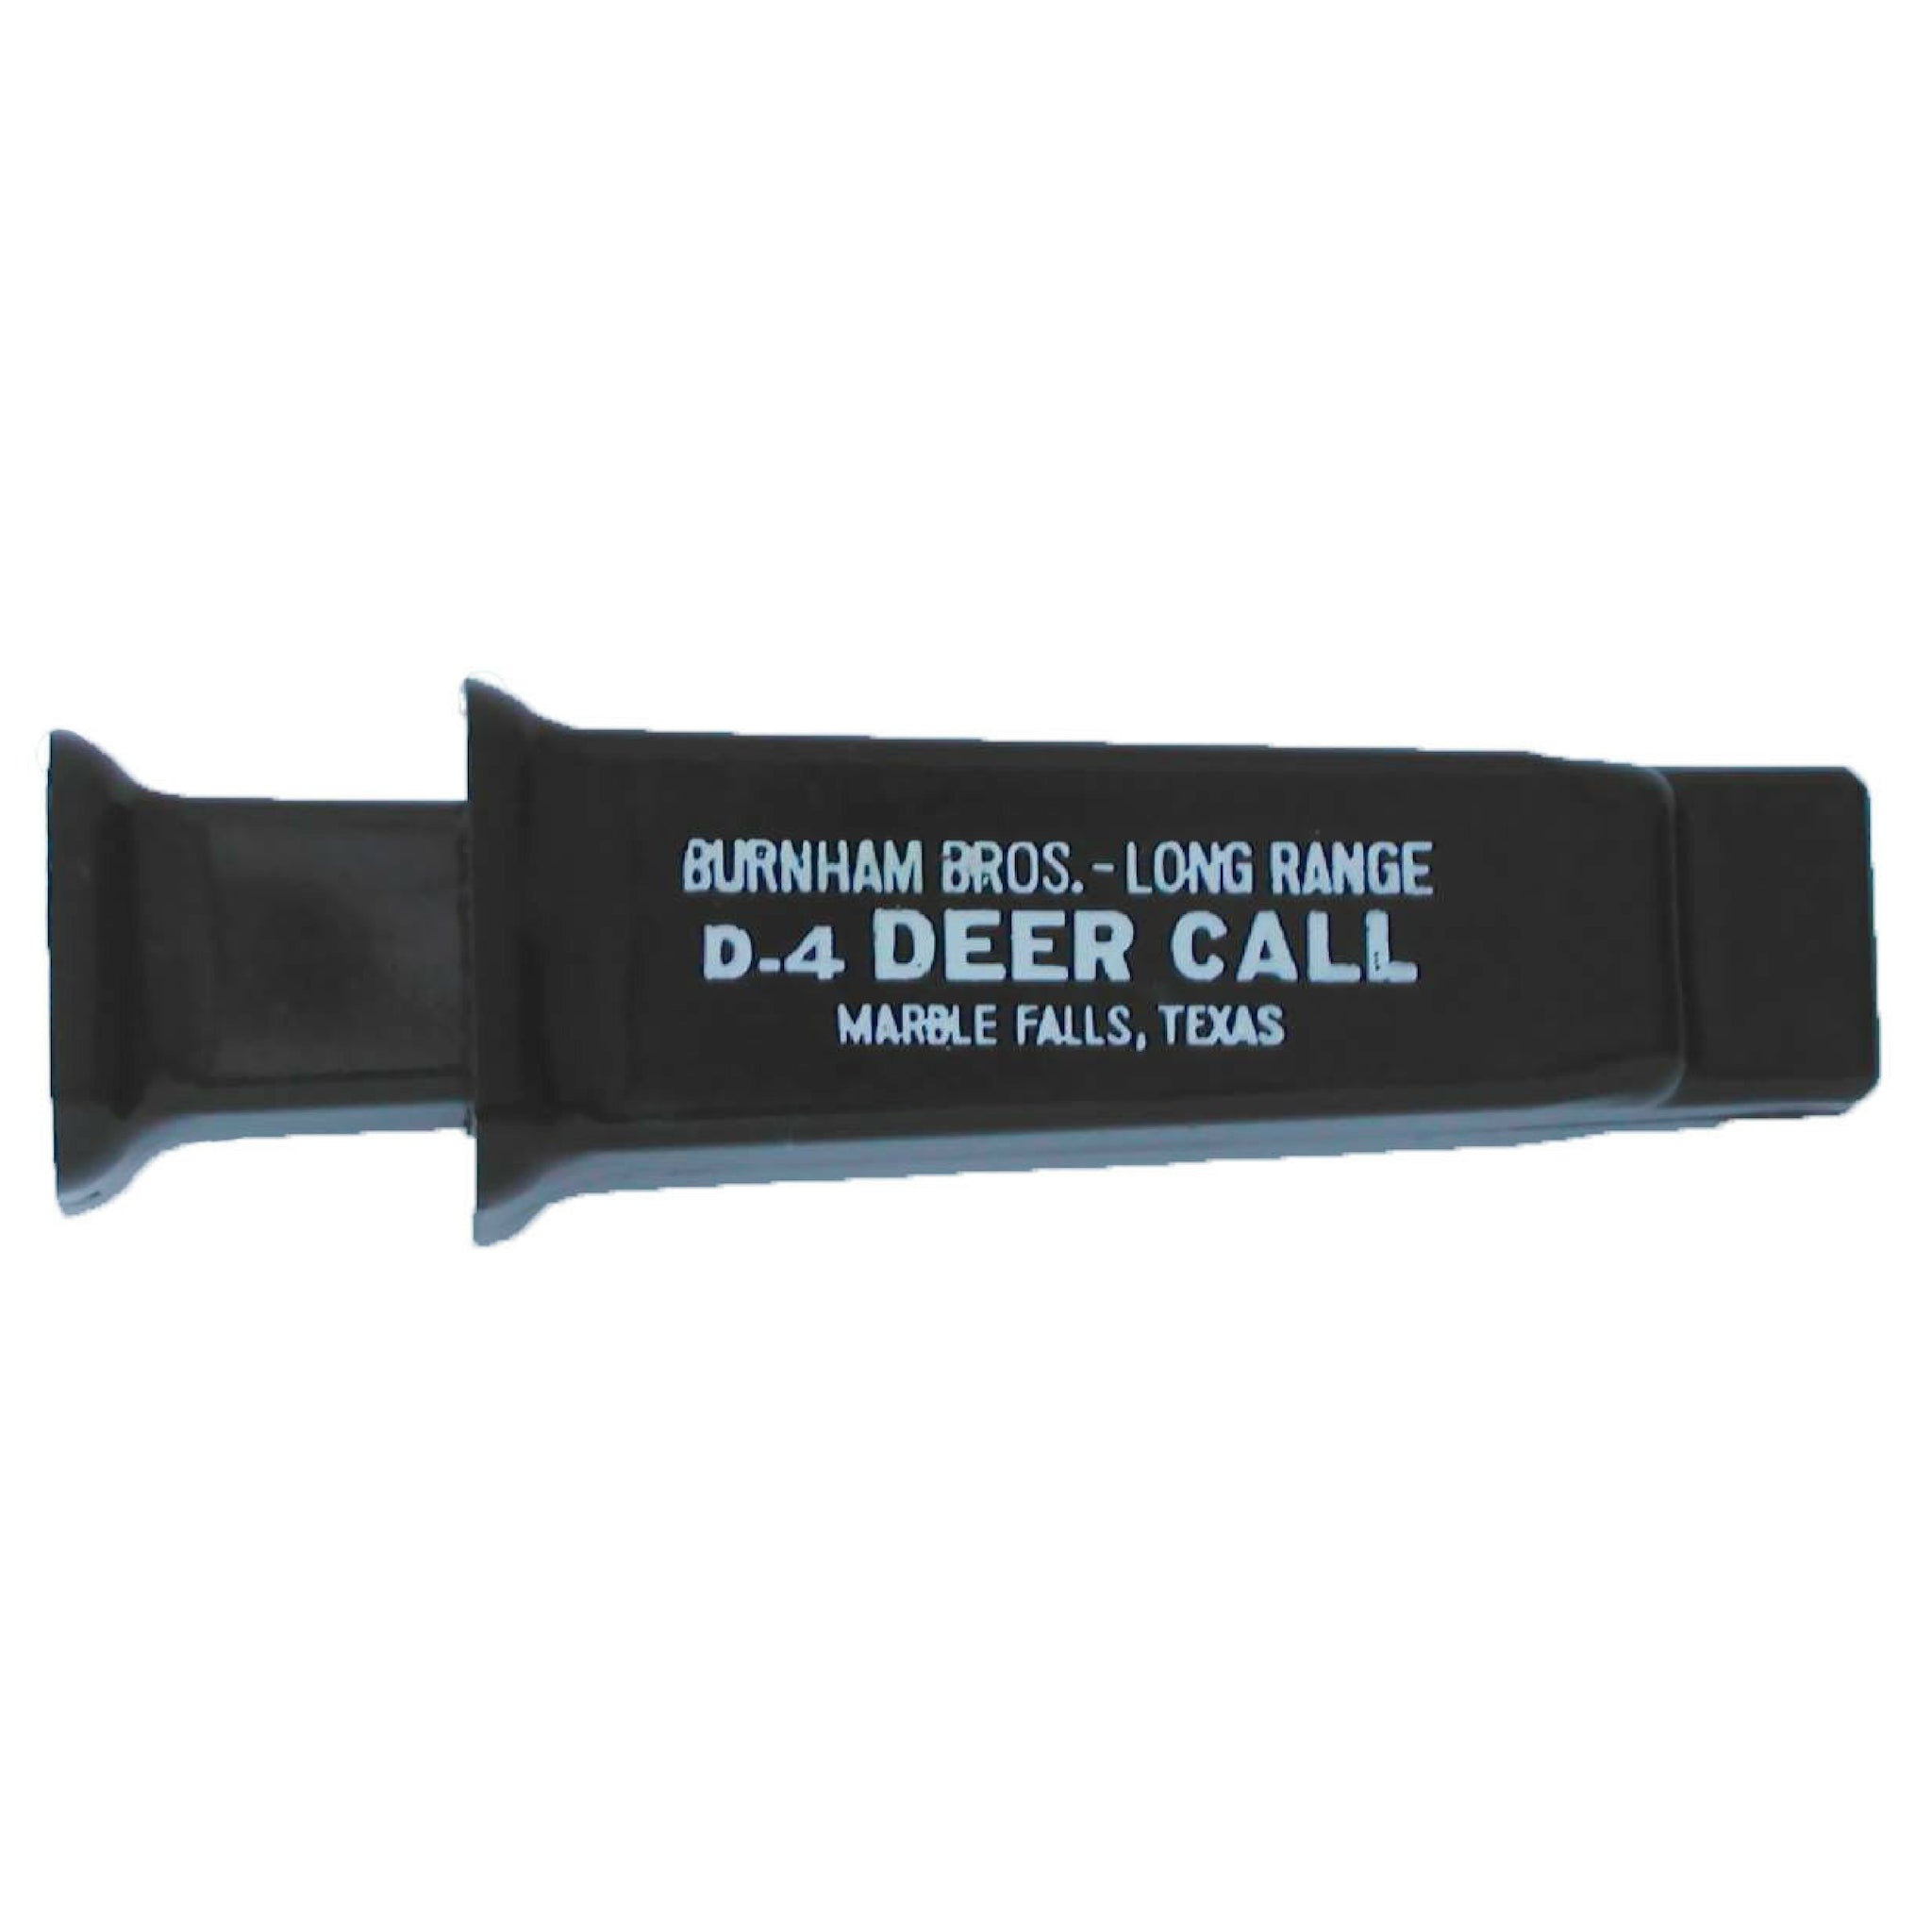 D-4 Deer Call by Burnham Brothers - Deer Hunting Call